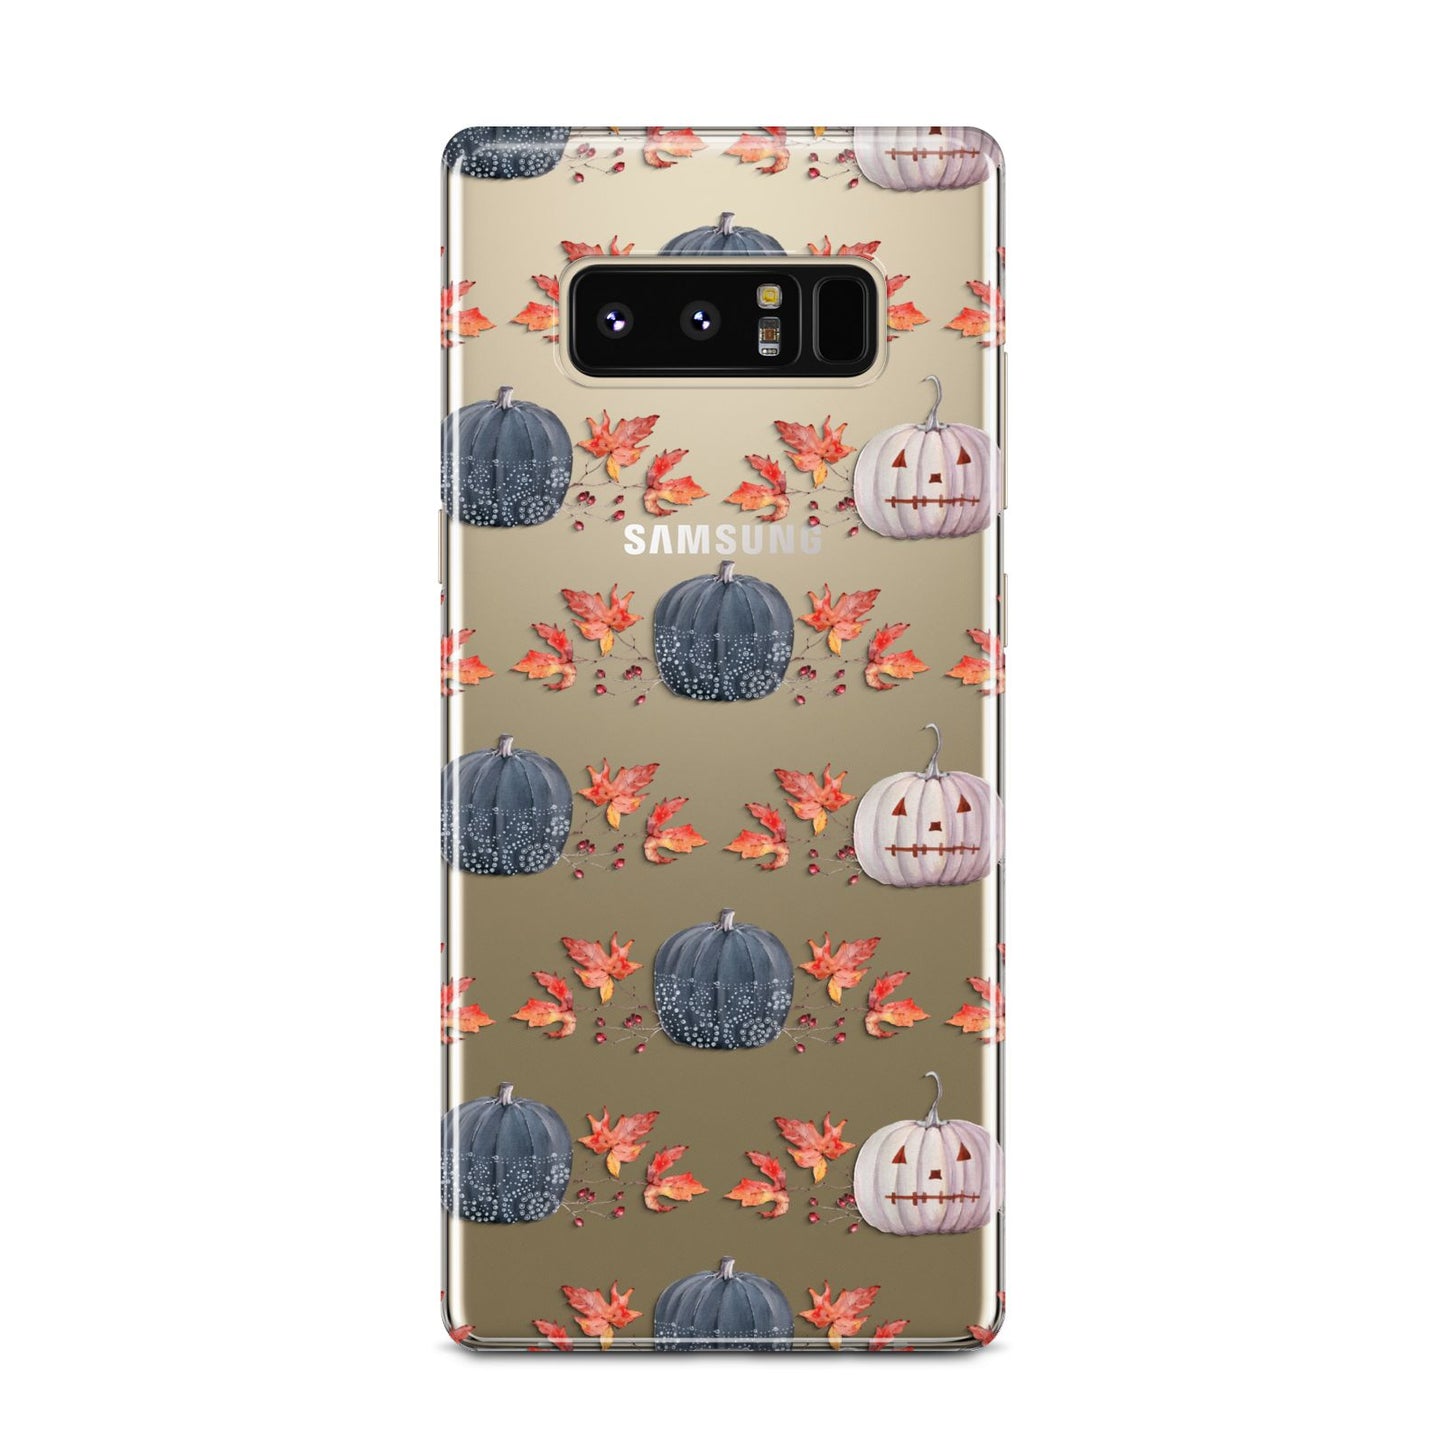 Pumpkin Autumn Leaves Samsung Galaxy Note 8 Case